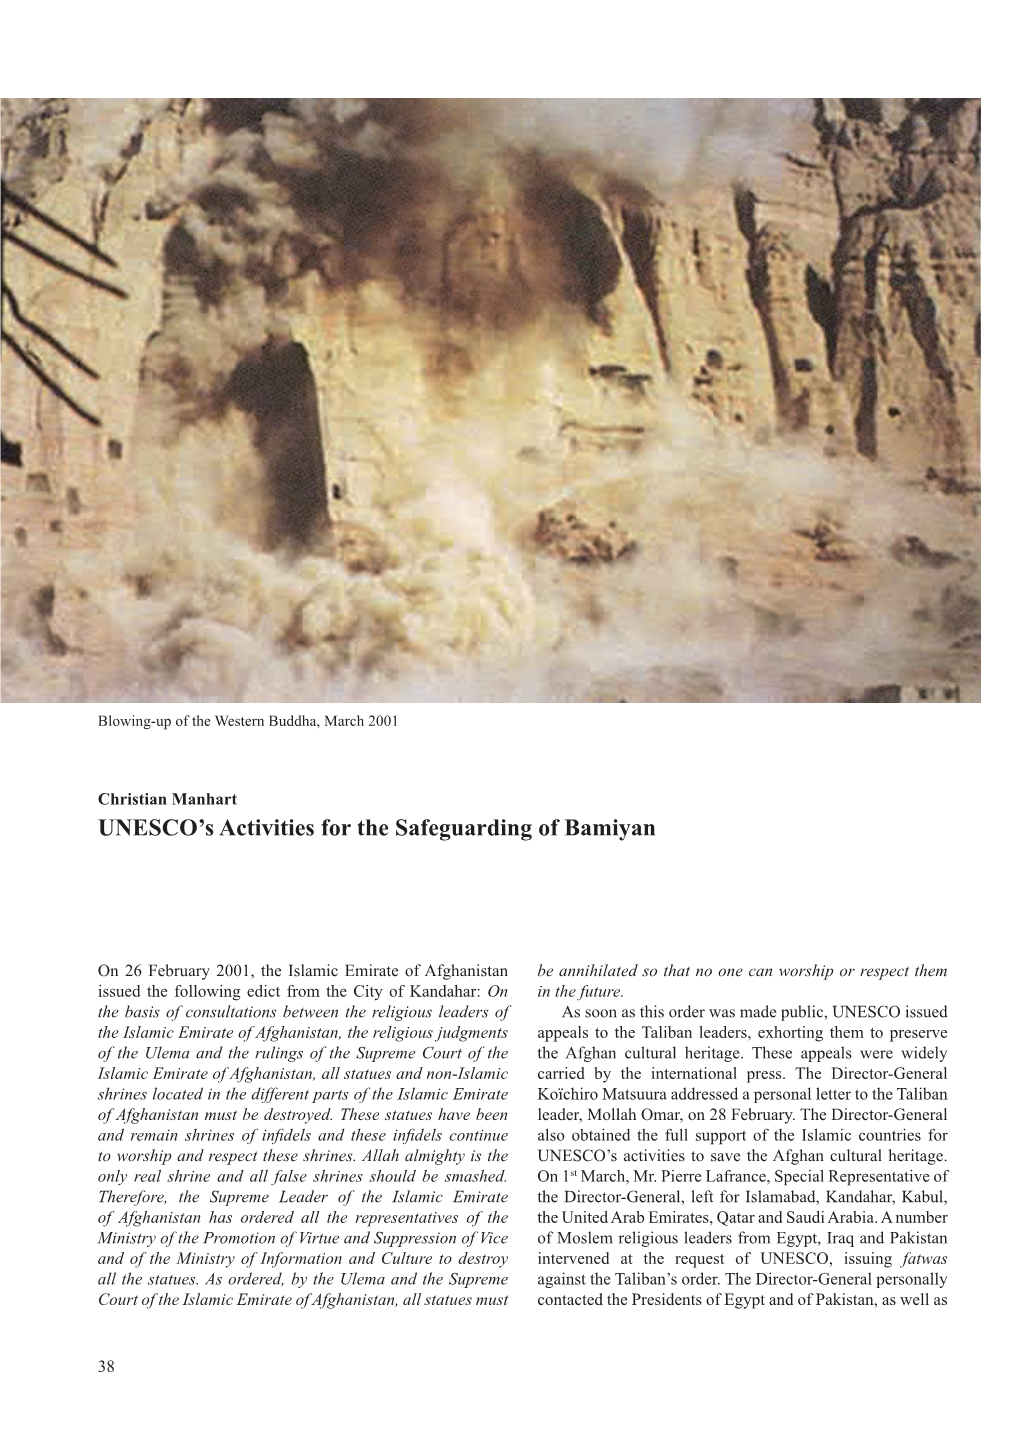 UNESCO's Activities for the Safeguarding of Bamiyan